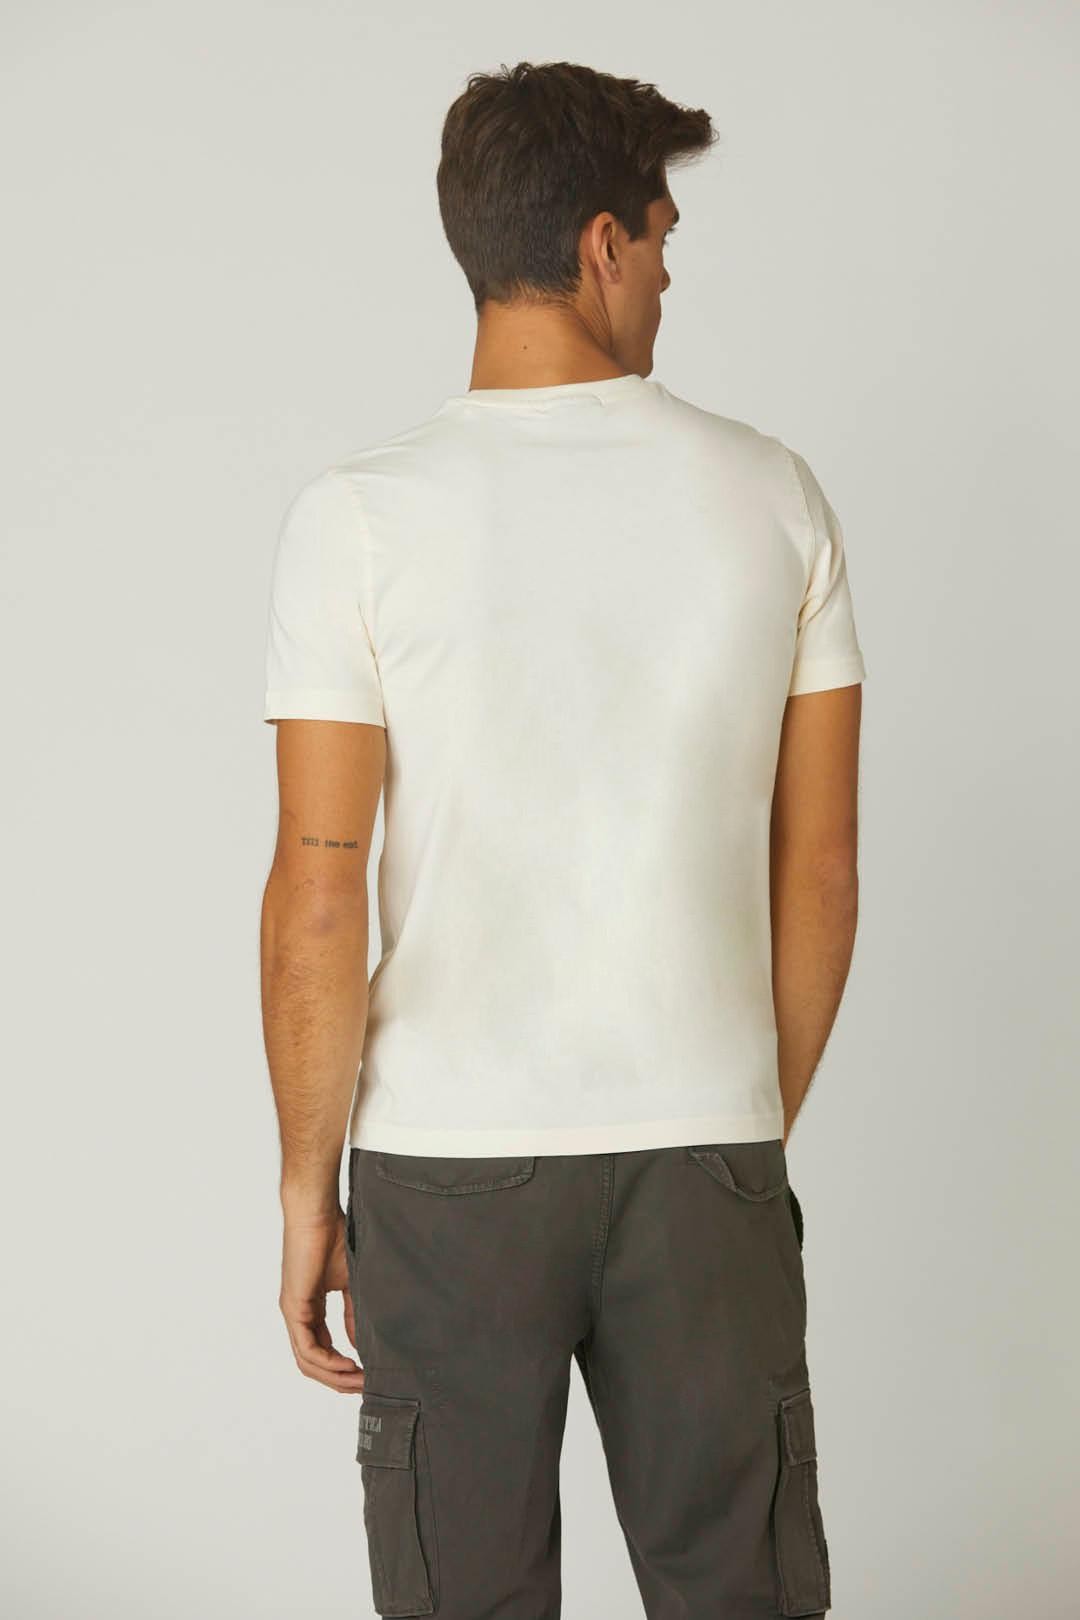 AERONAUTICA MILITARE, Camiseta Blanco de Hombre